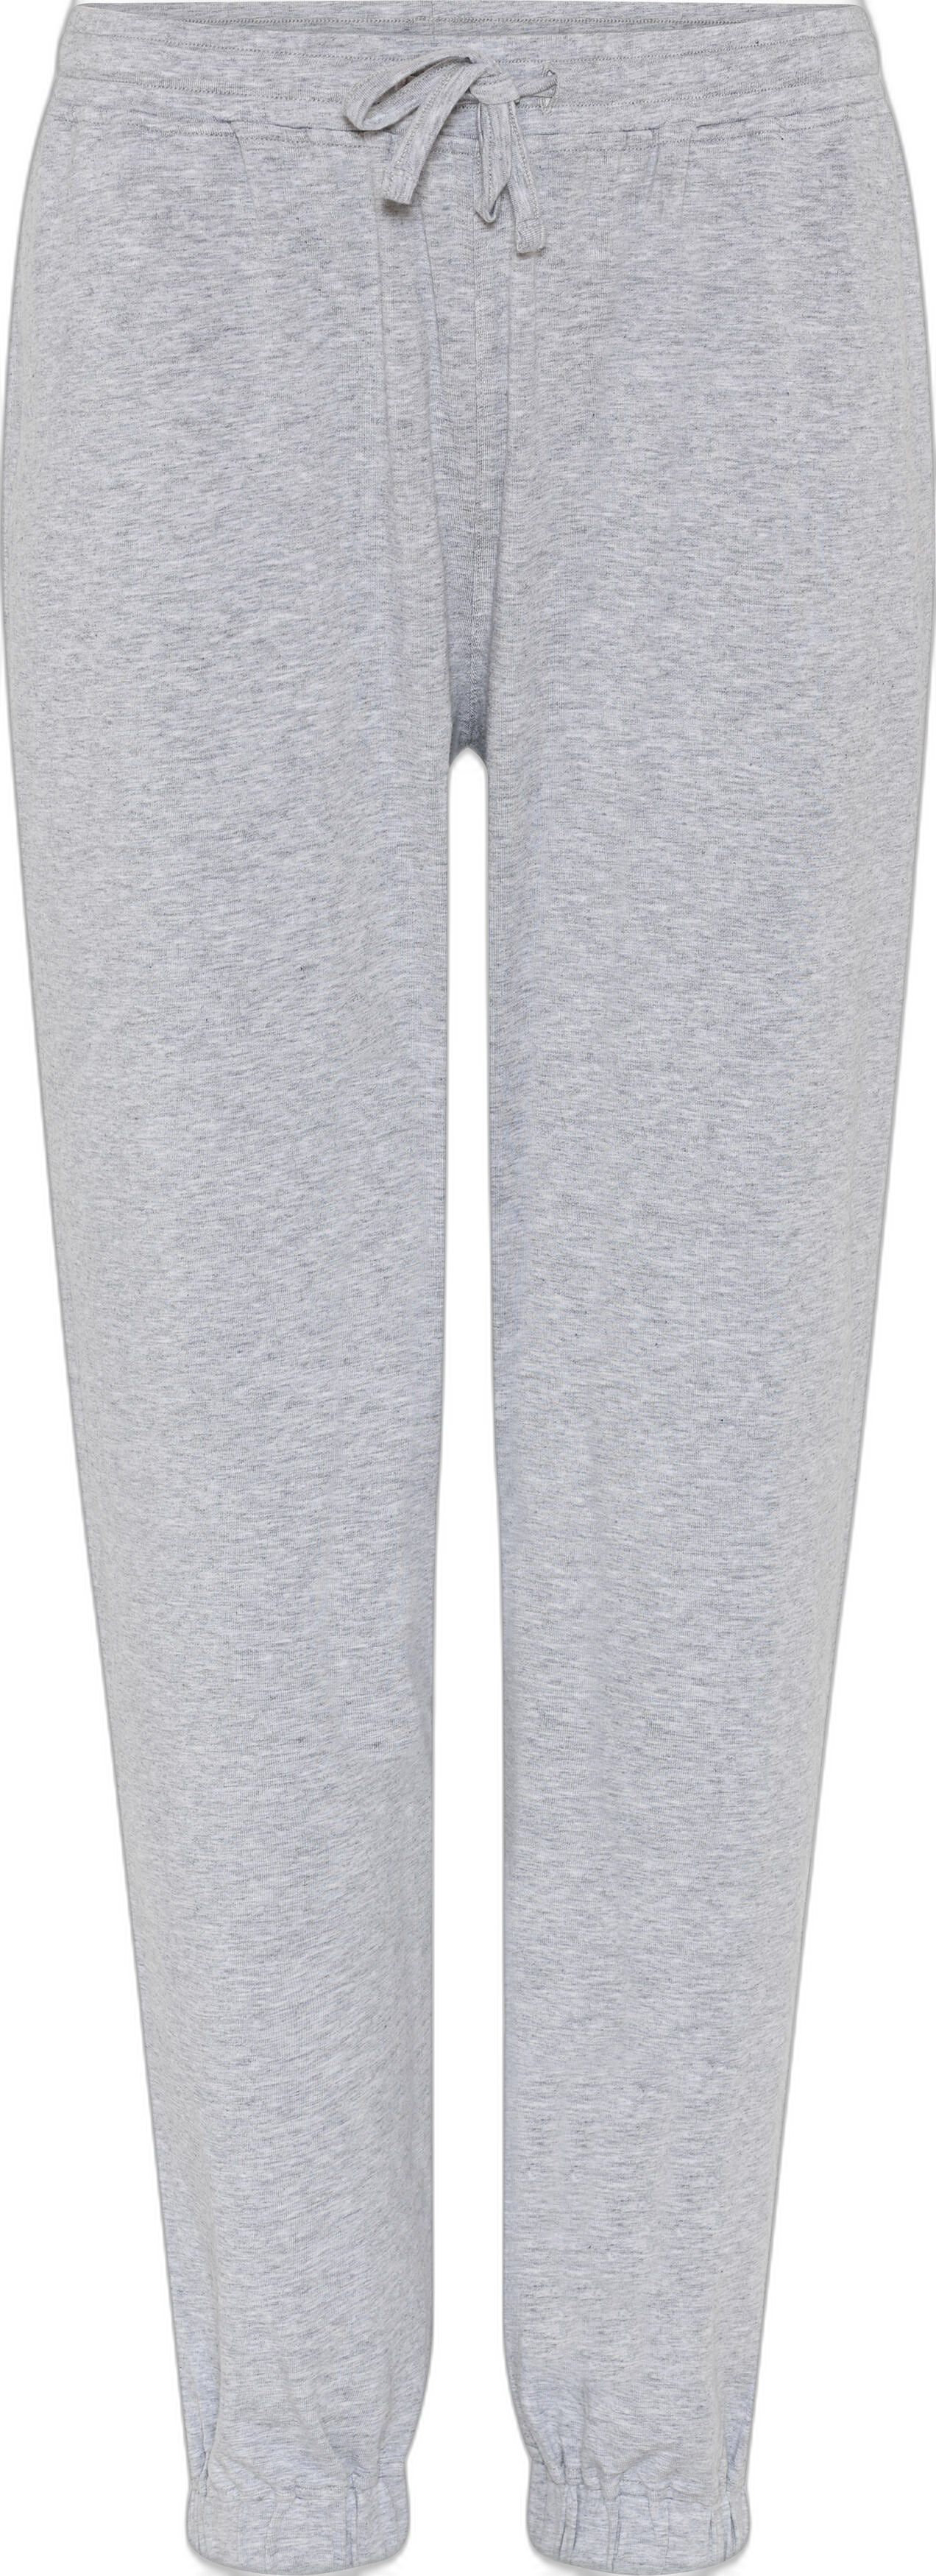 JBS of Denmark - Pants Grey.